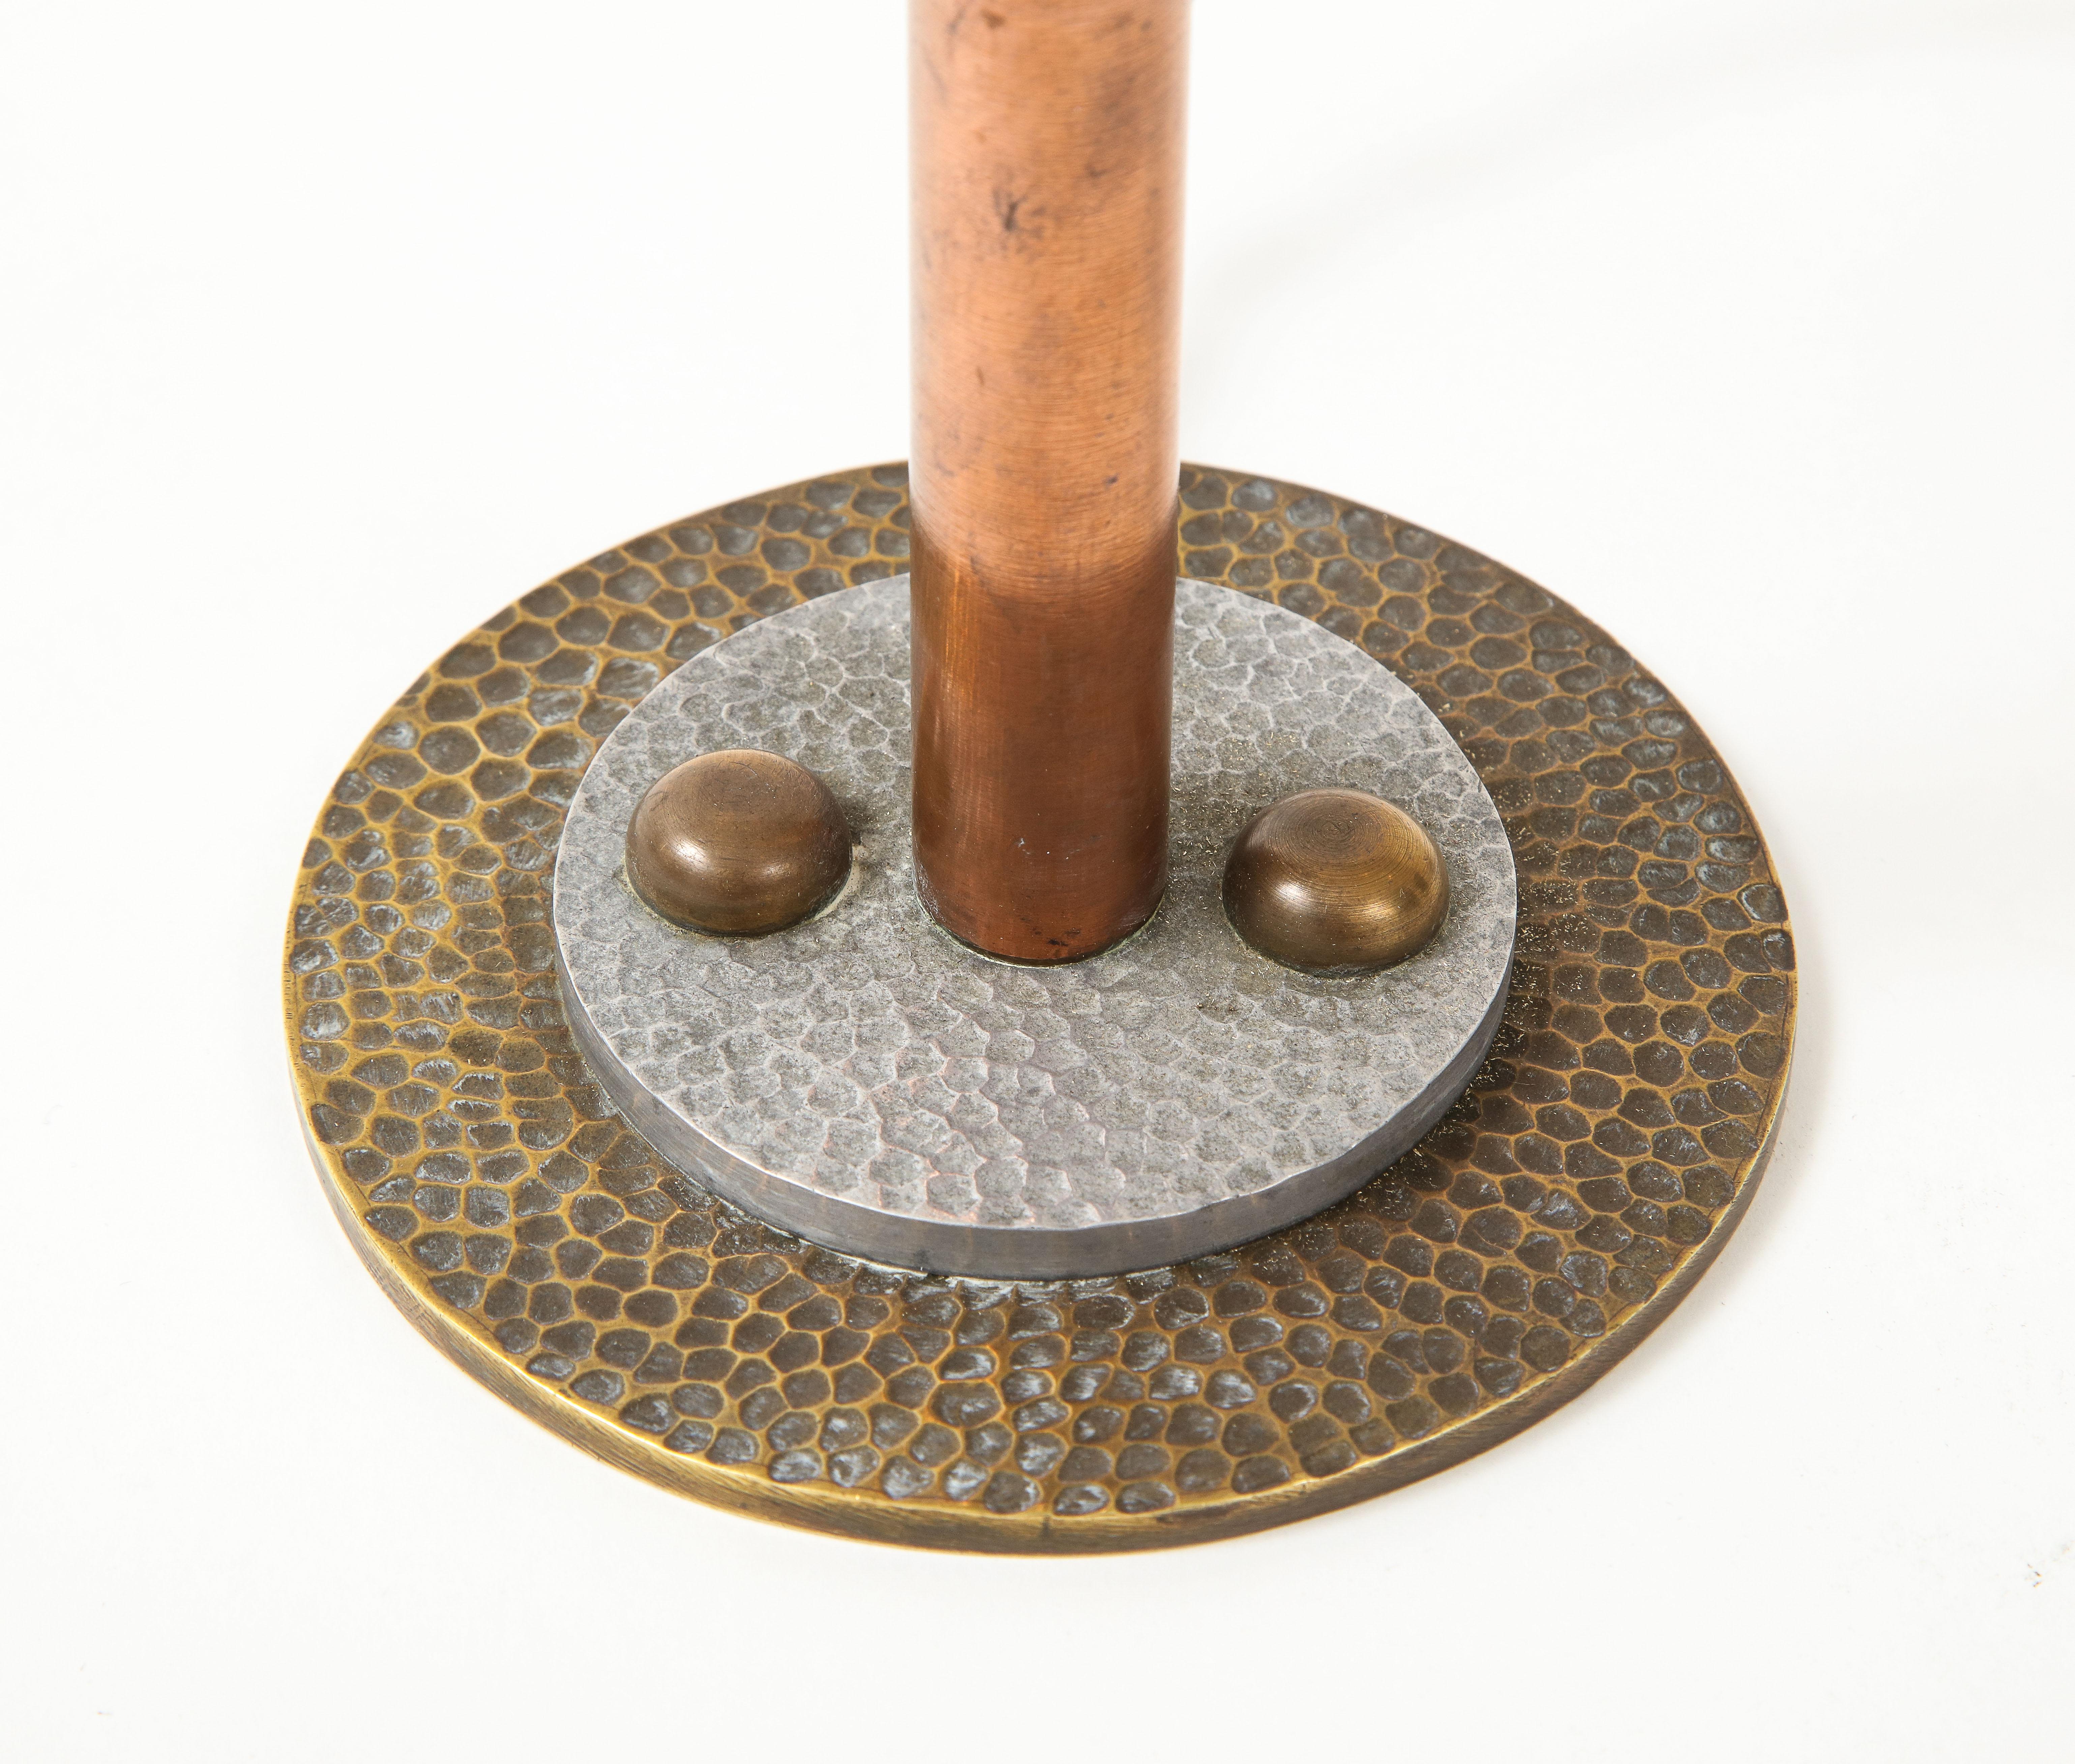 Elegant petite table or desk lamp
Art Nouveau period
unusual hammered brass details
new rewiring.